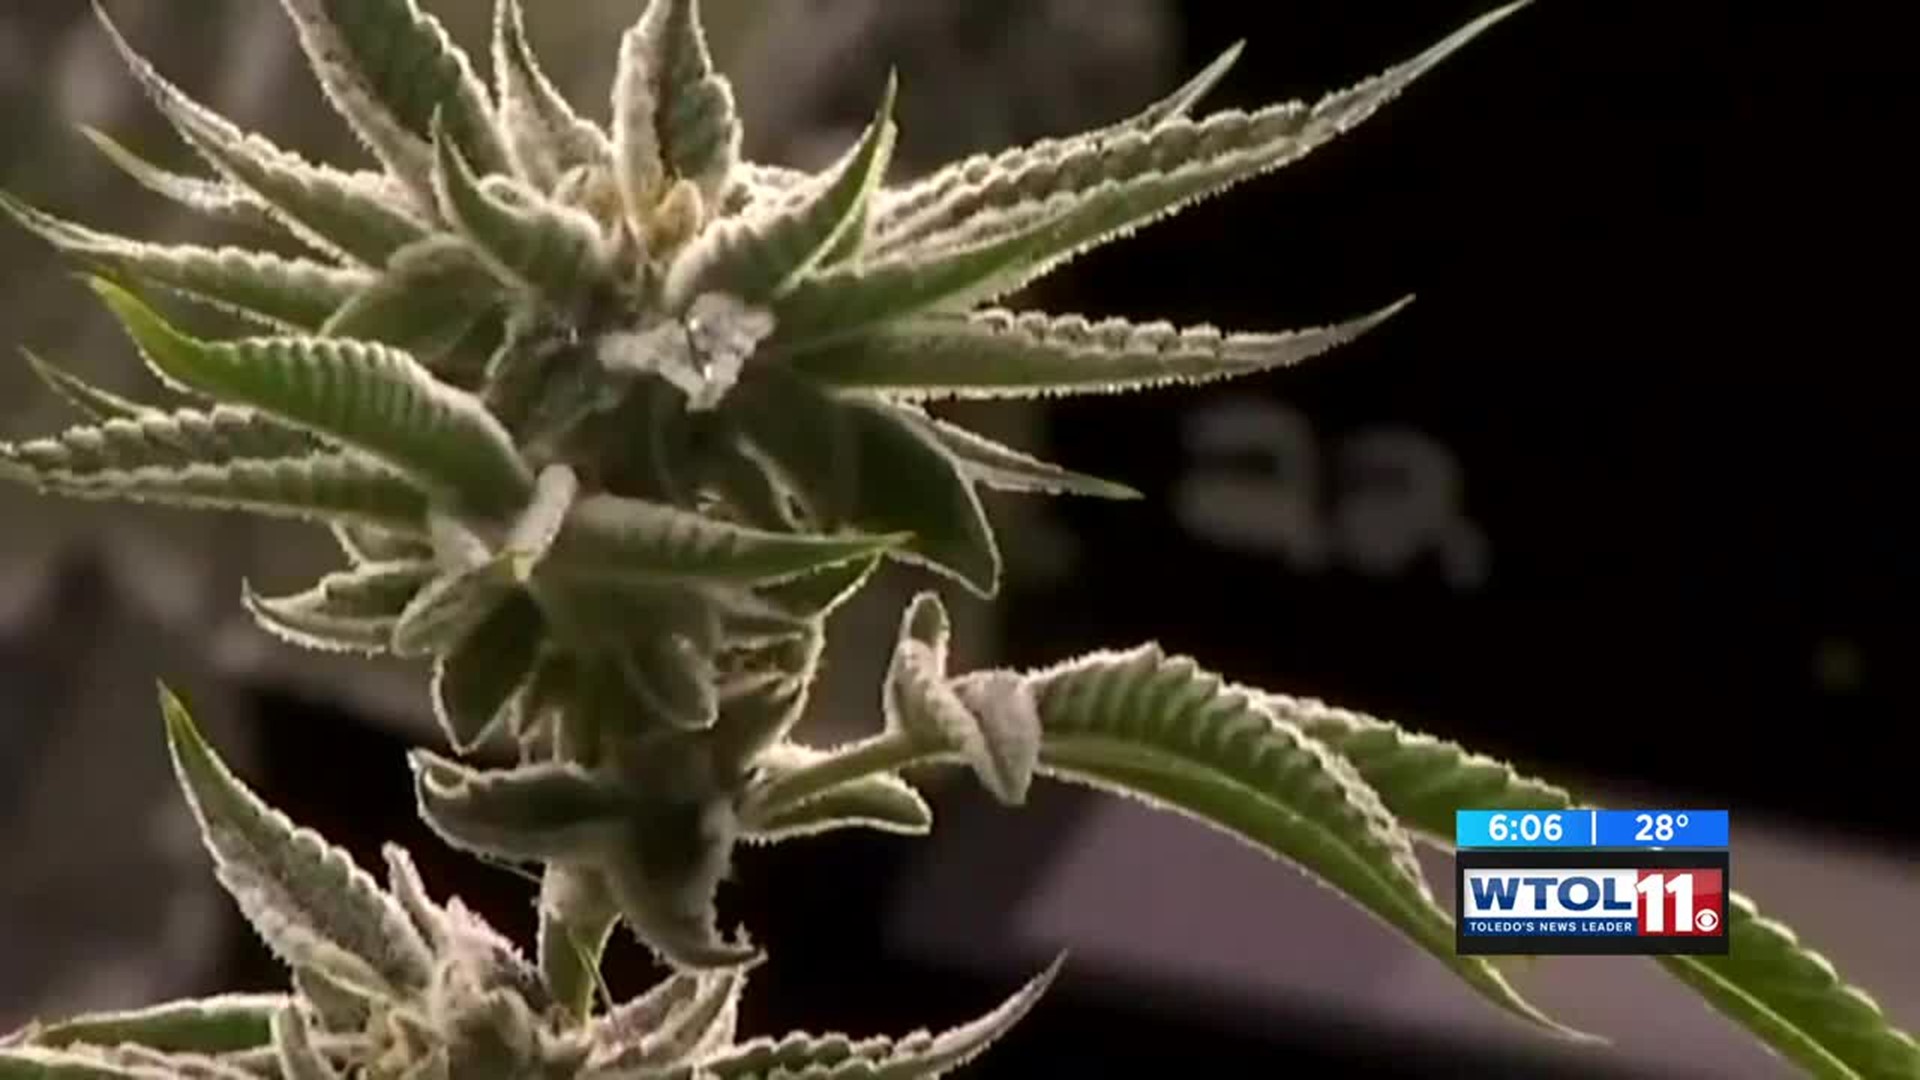 Medical Marijuana dispensary in Sandusky poised to open its doors